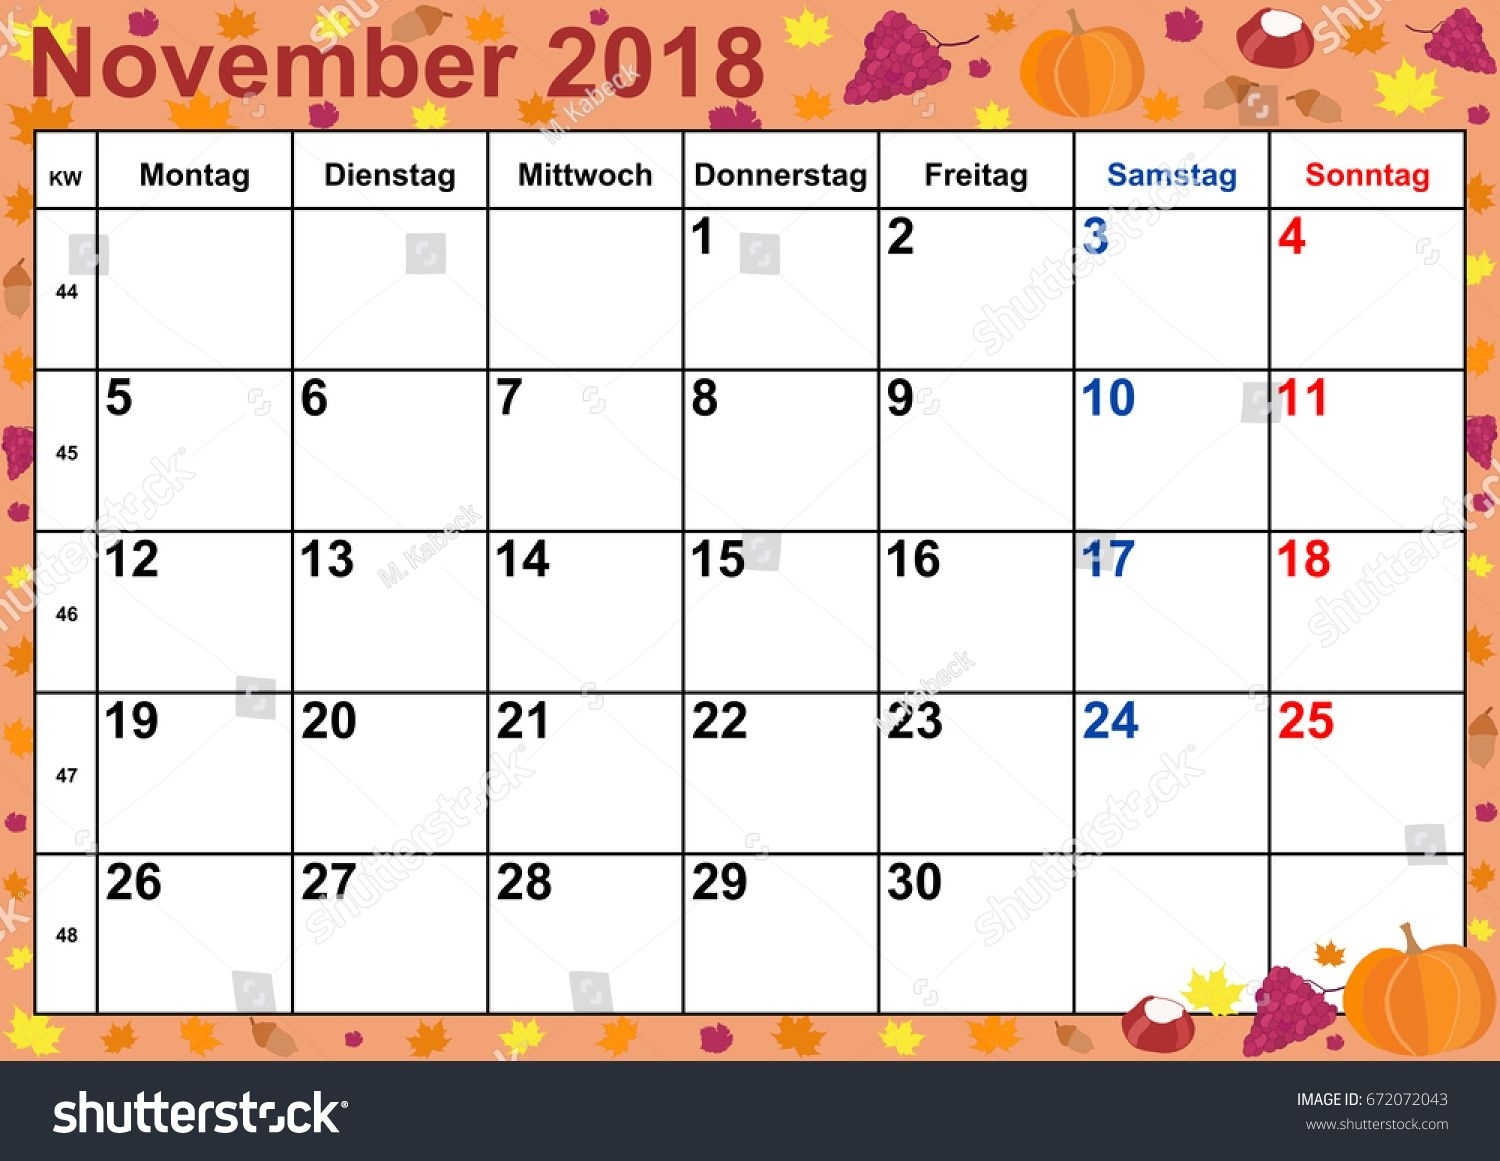 November 2018 Calendar Month | November Calendar | Pinterest Calendar Of Month November